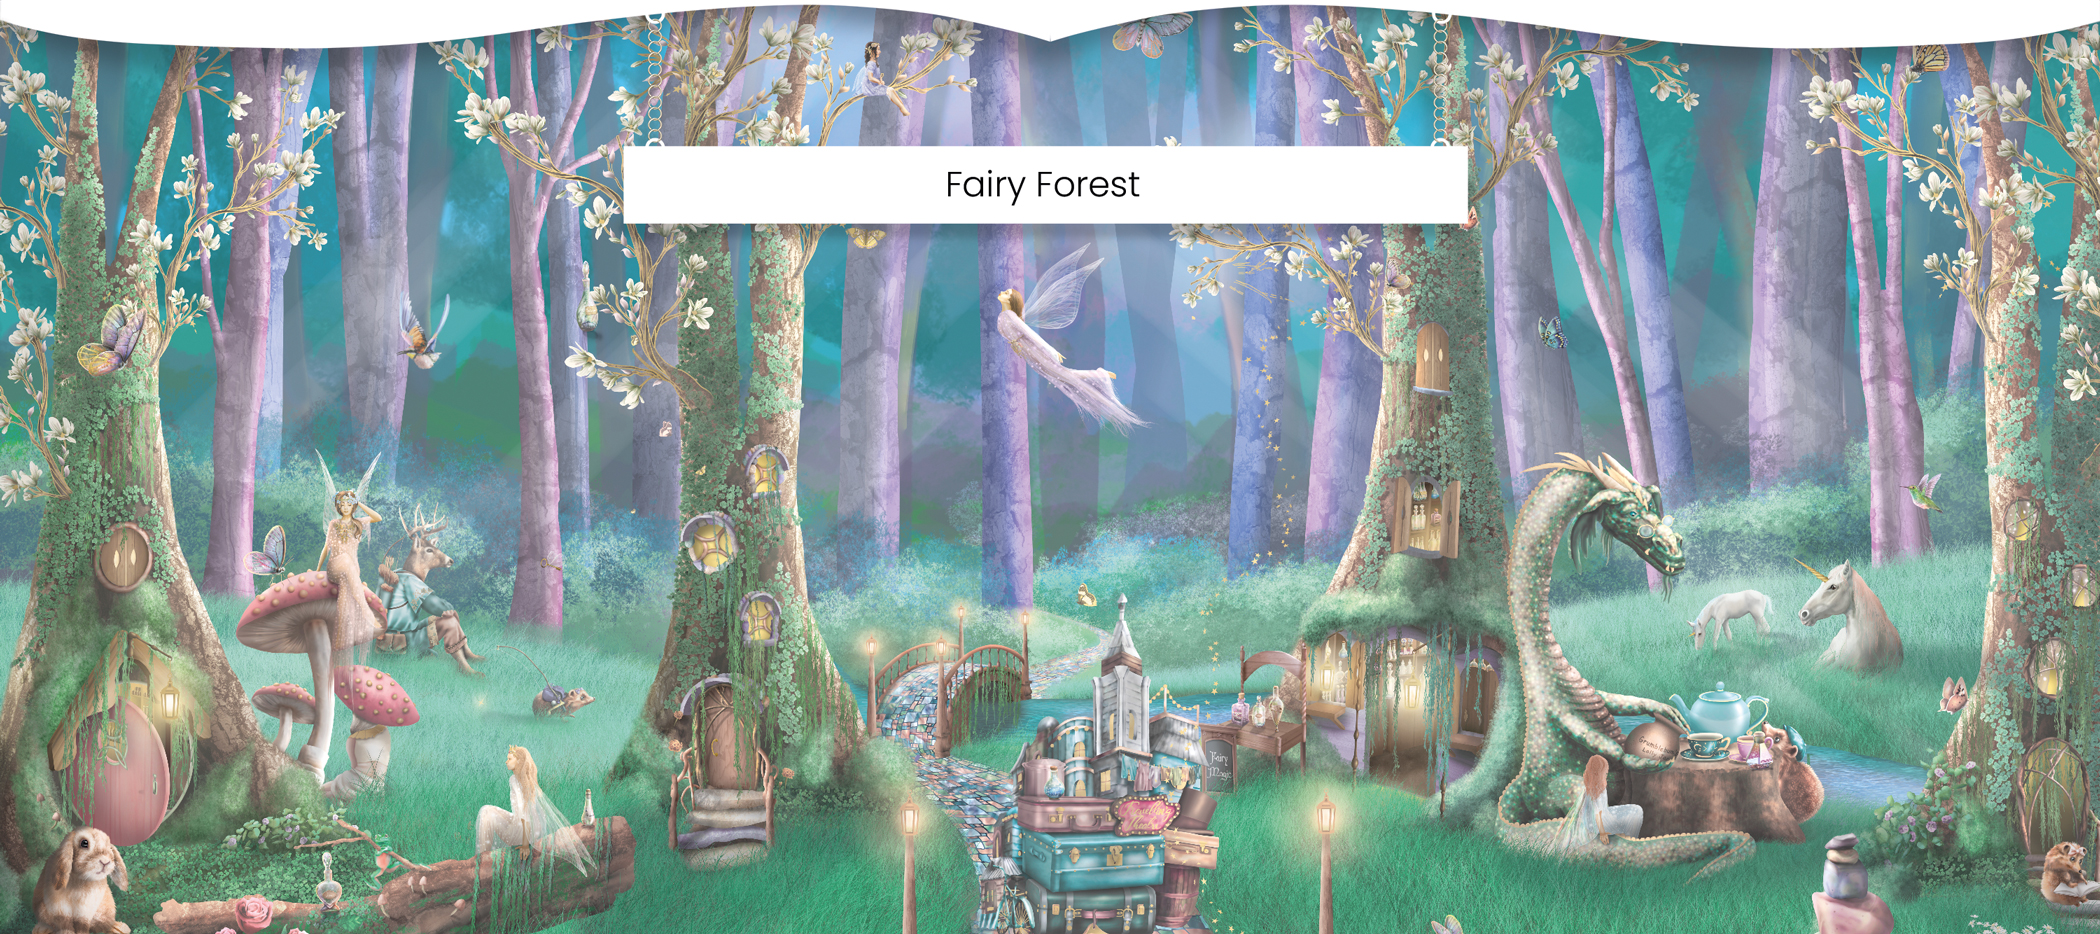 Fairytale wallpaper kids wall mural fairy forest